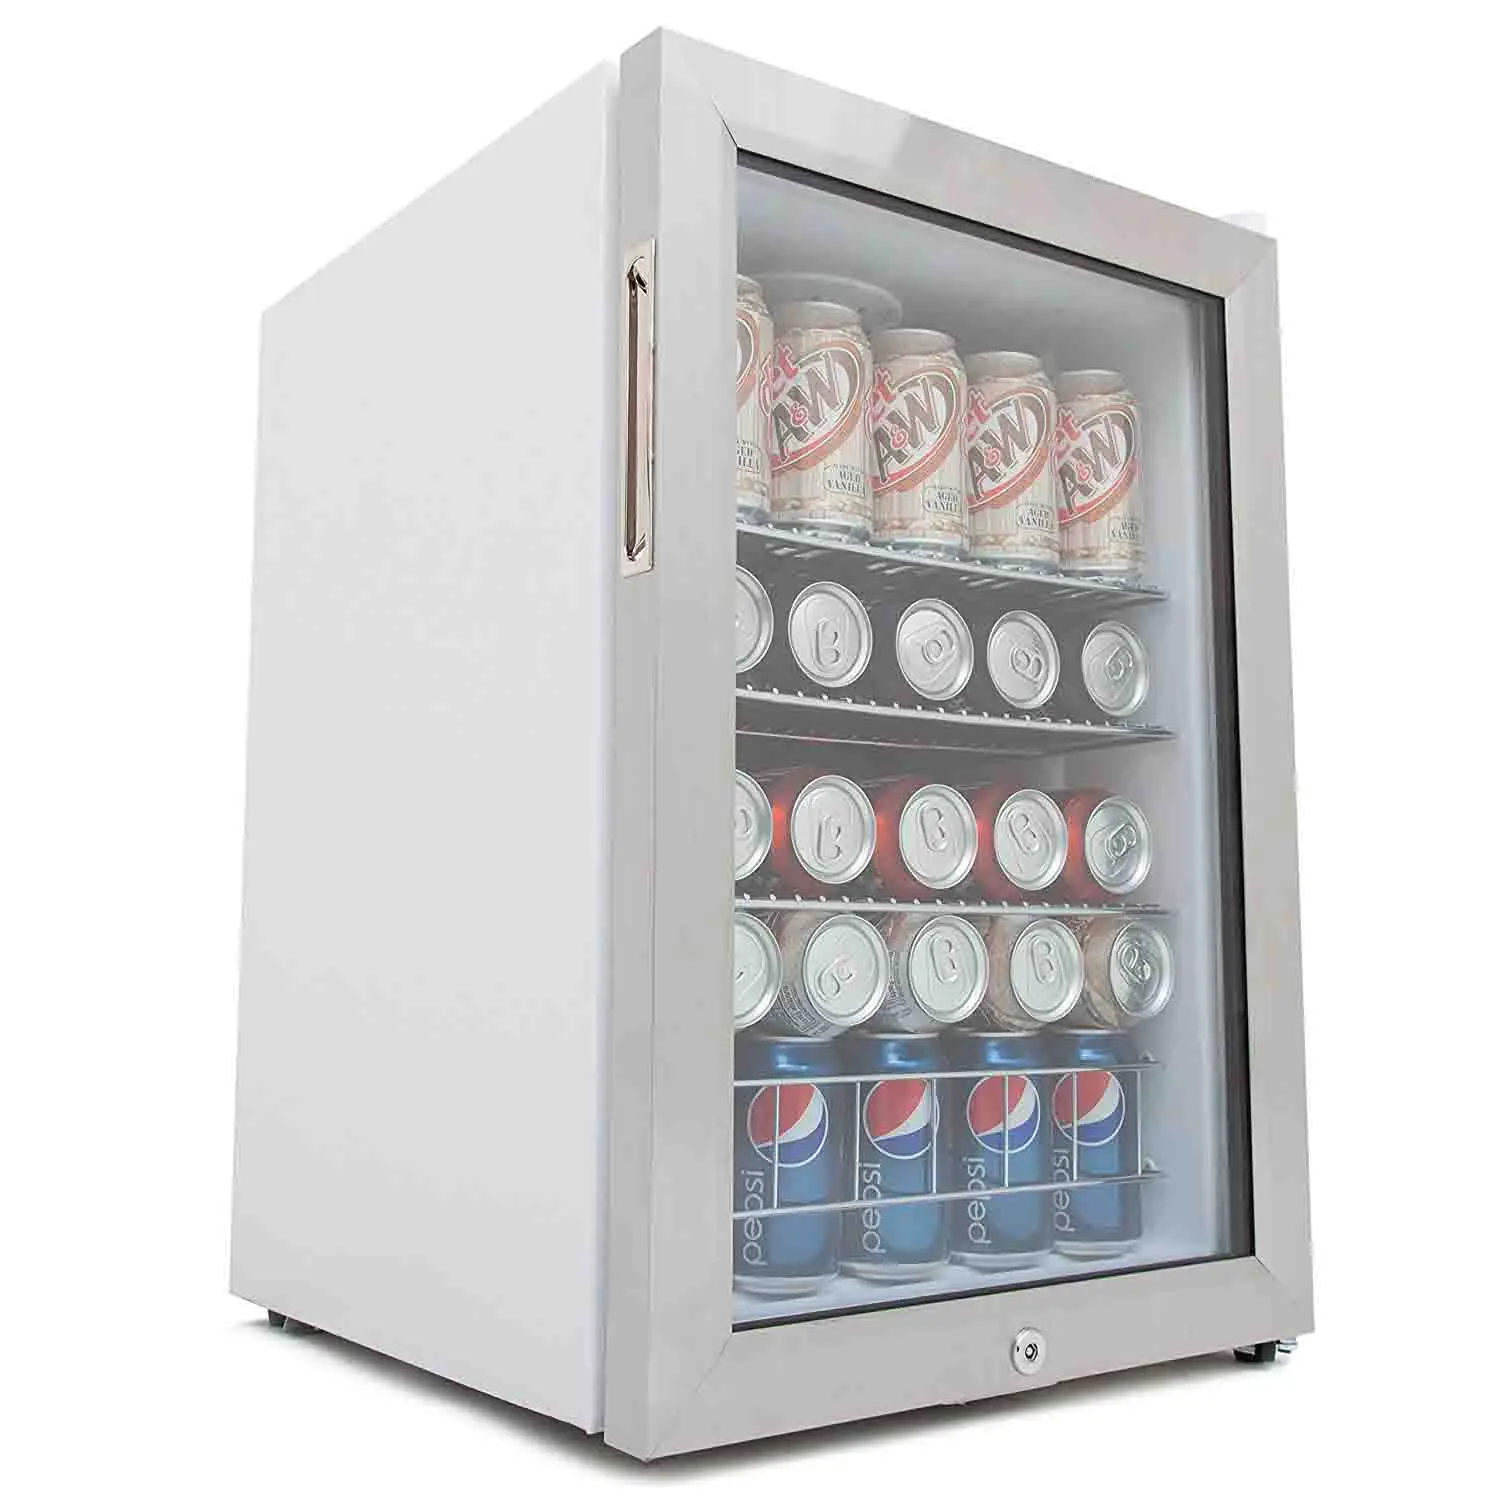 70L Mini display cooler, refrigerator, beverages fridge, high quality,factory